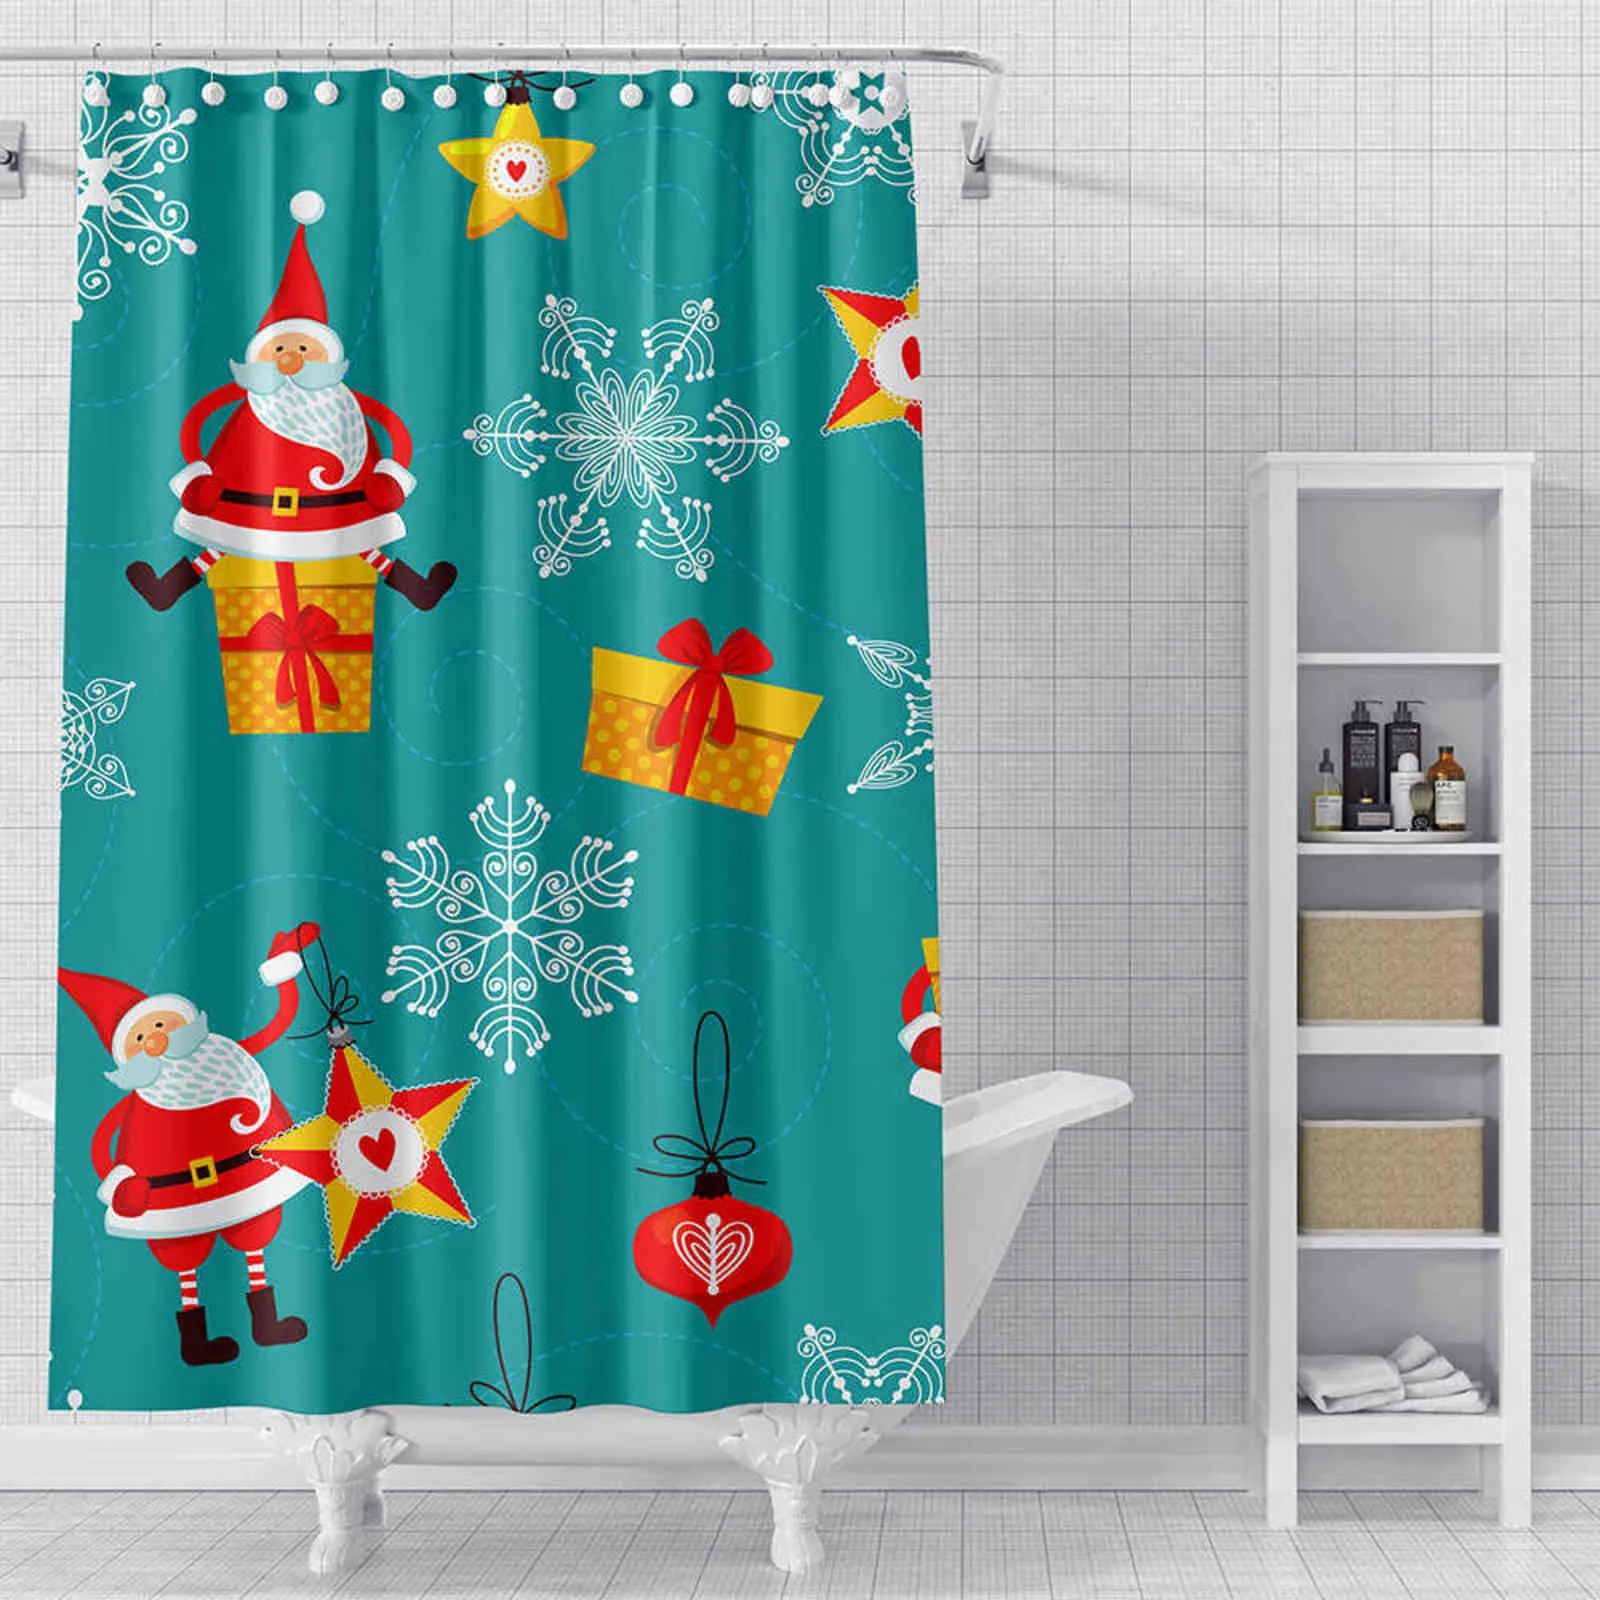 3Dプリントクリスマスシャワーカーテンバスルームカーテンフック付きバスルームカバー用浴室防水防水防水シャワーカーテン211116